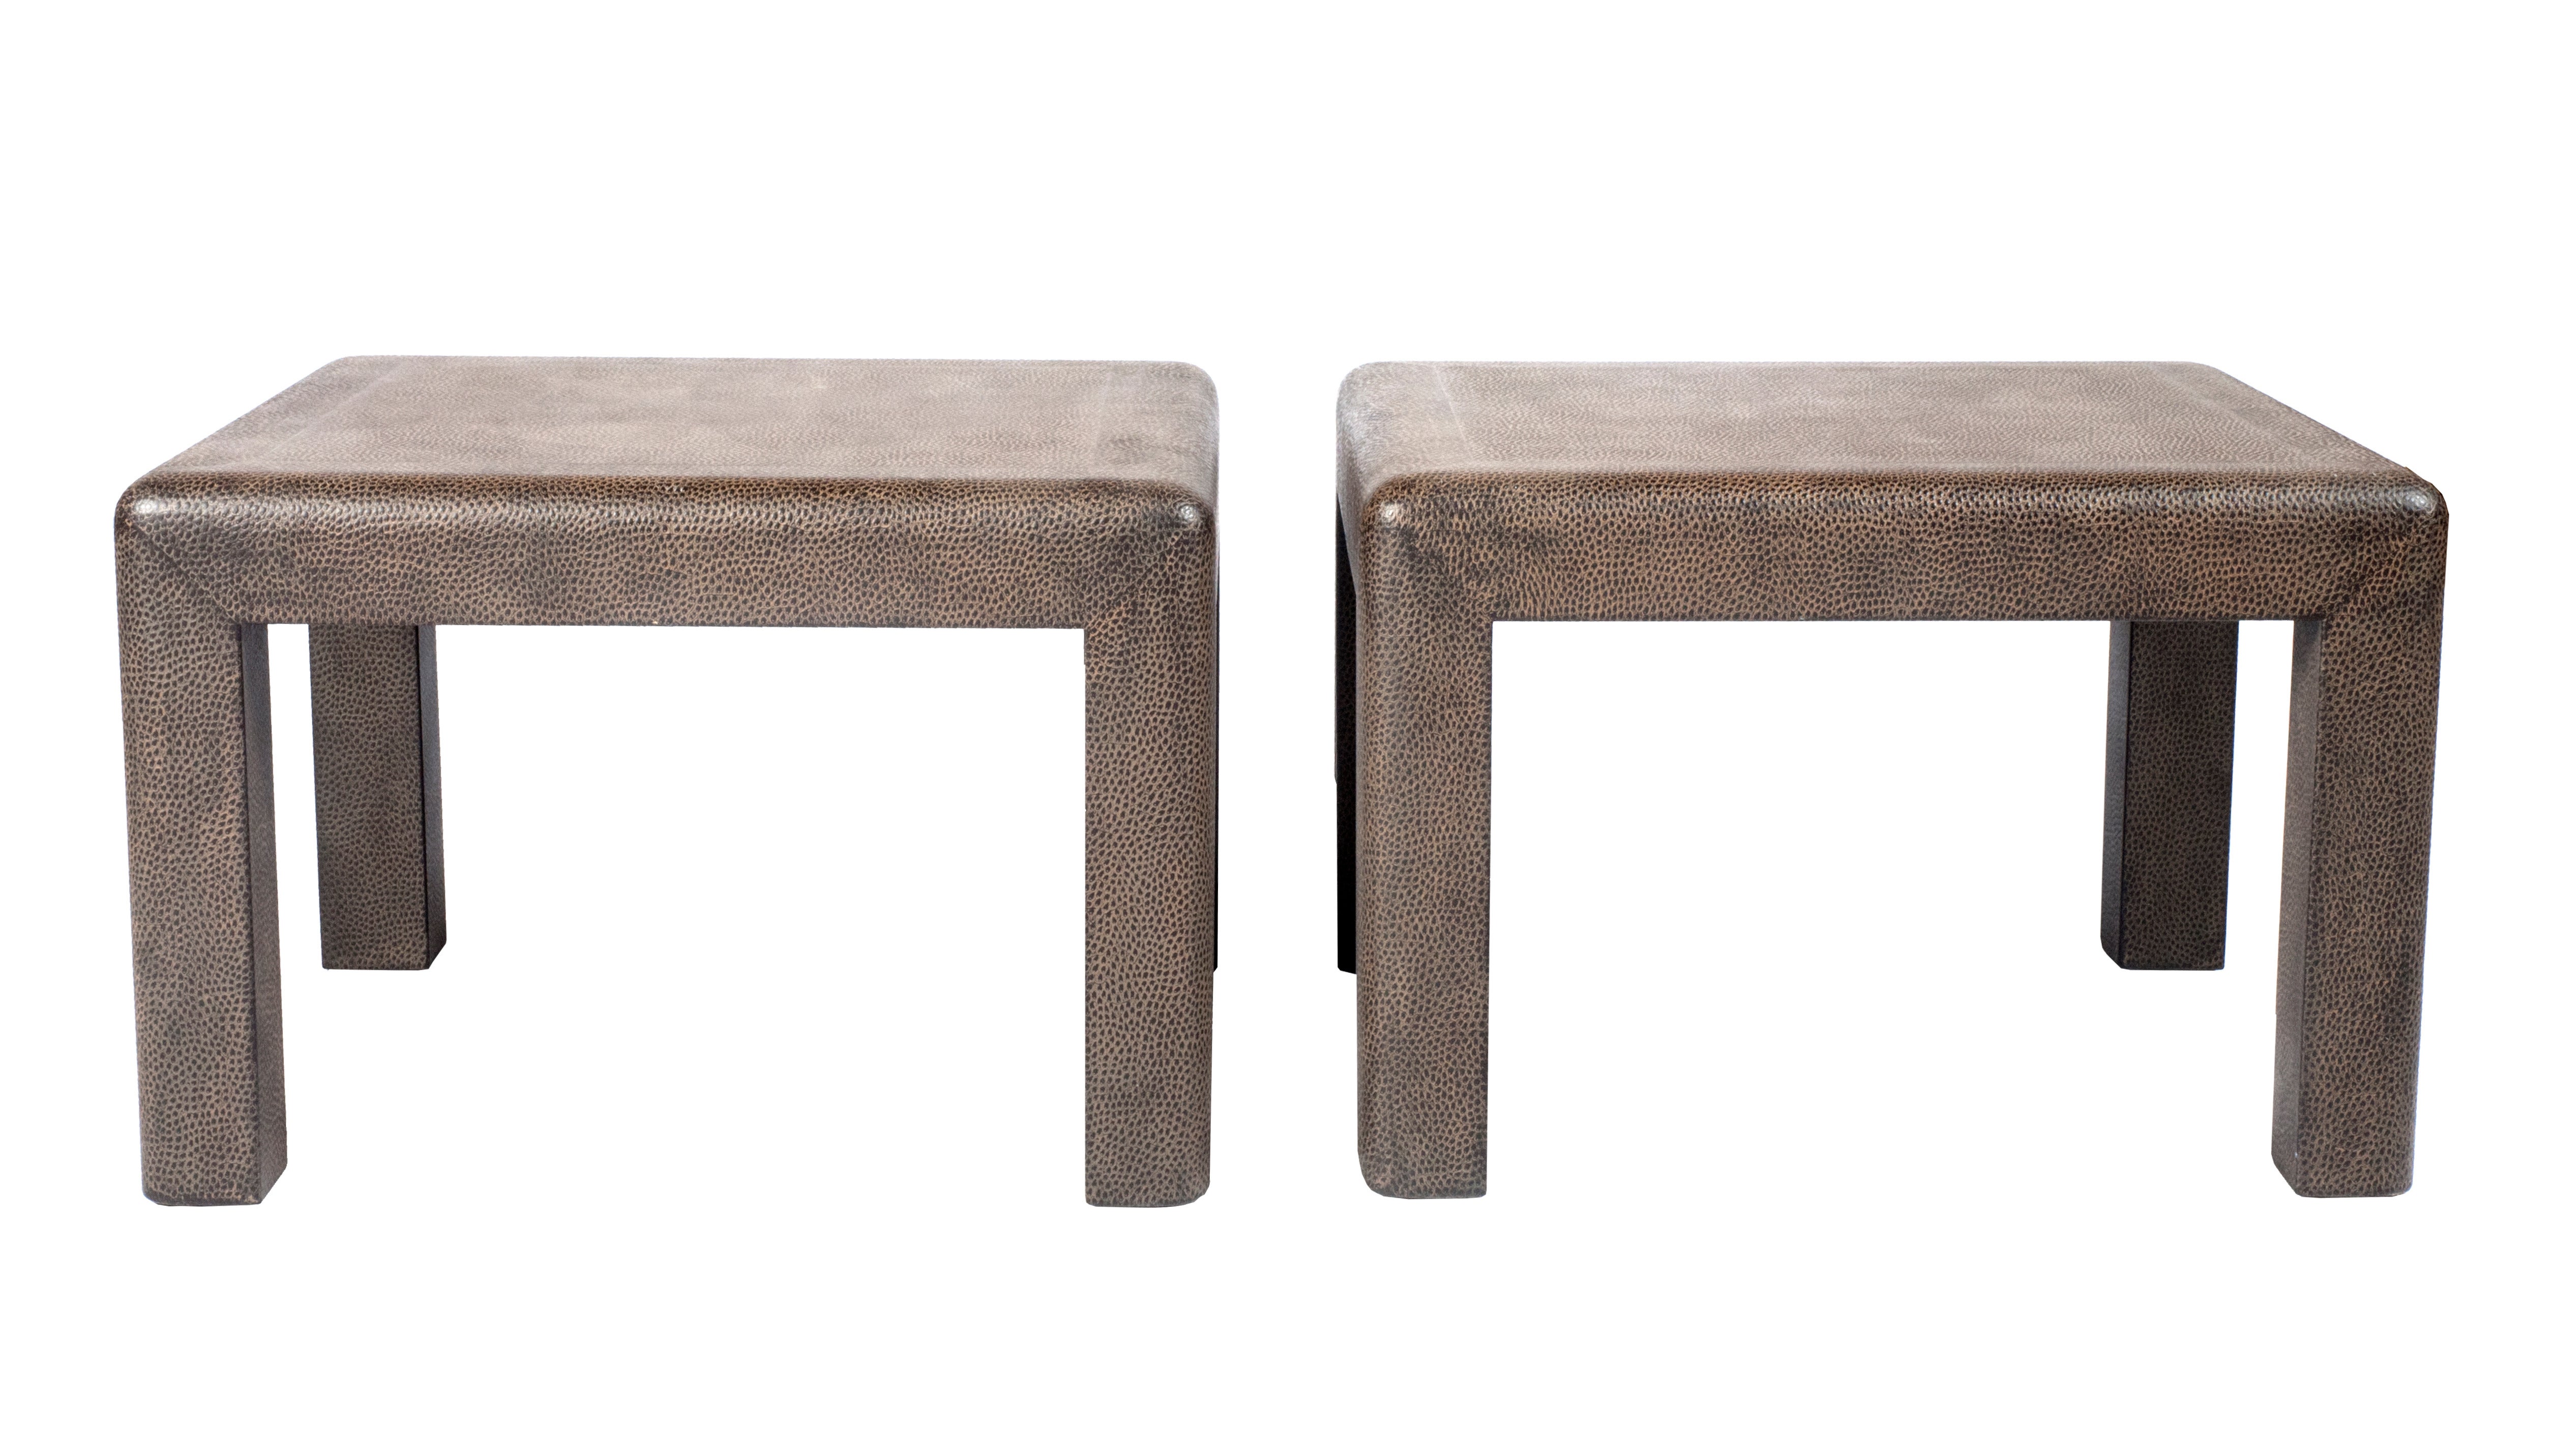 Pair of Signed Karl Springer Leather-Clad End Tables